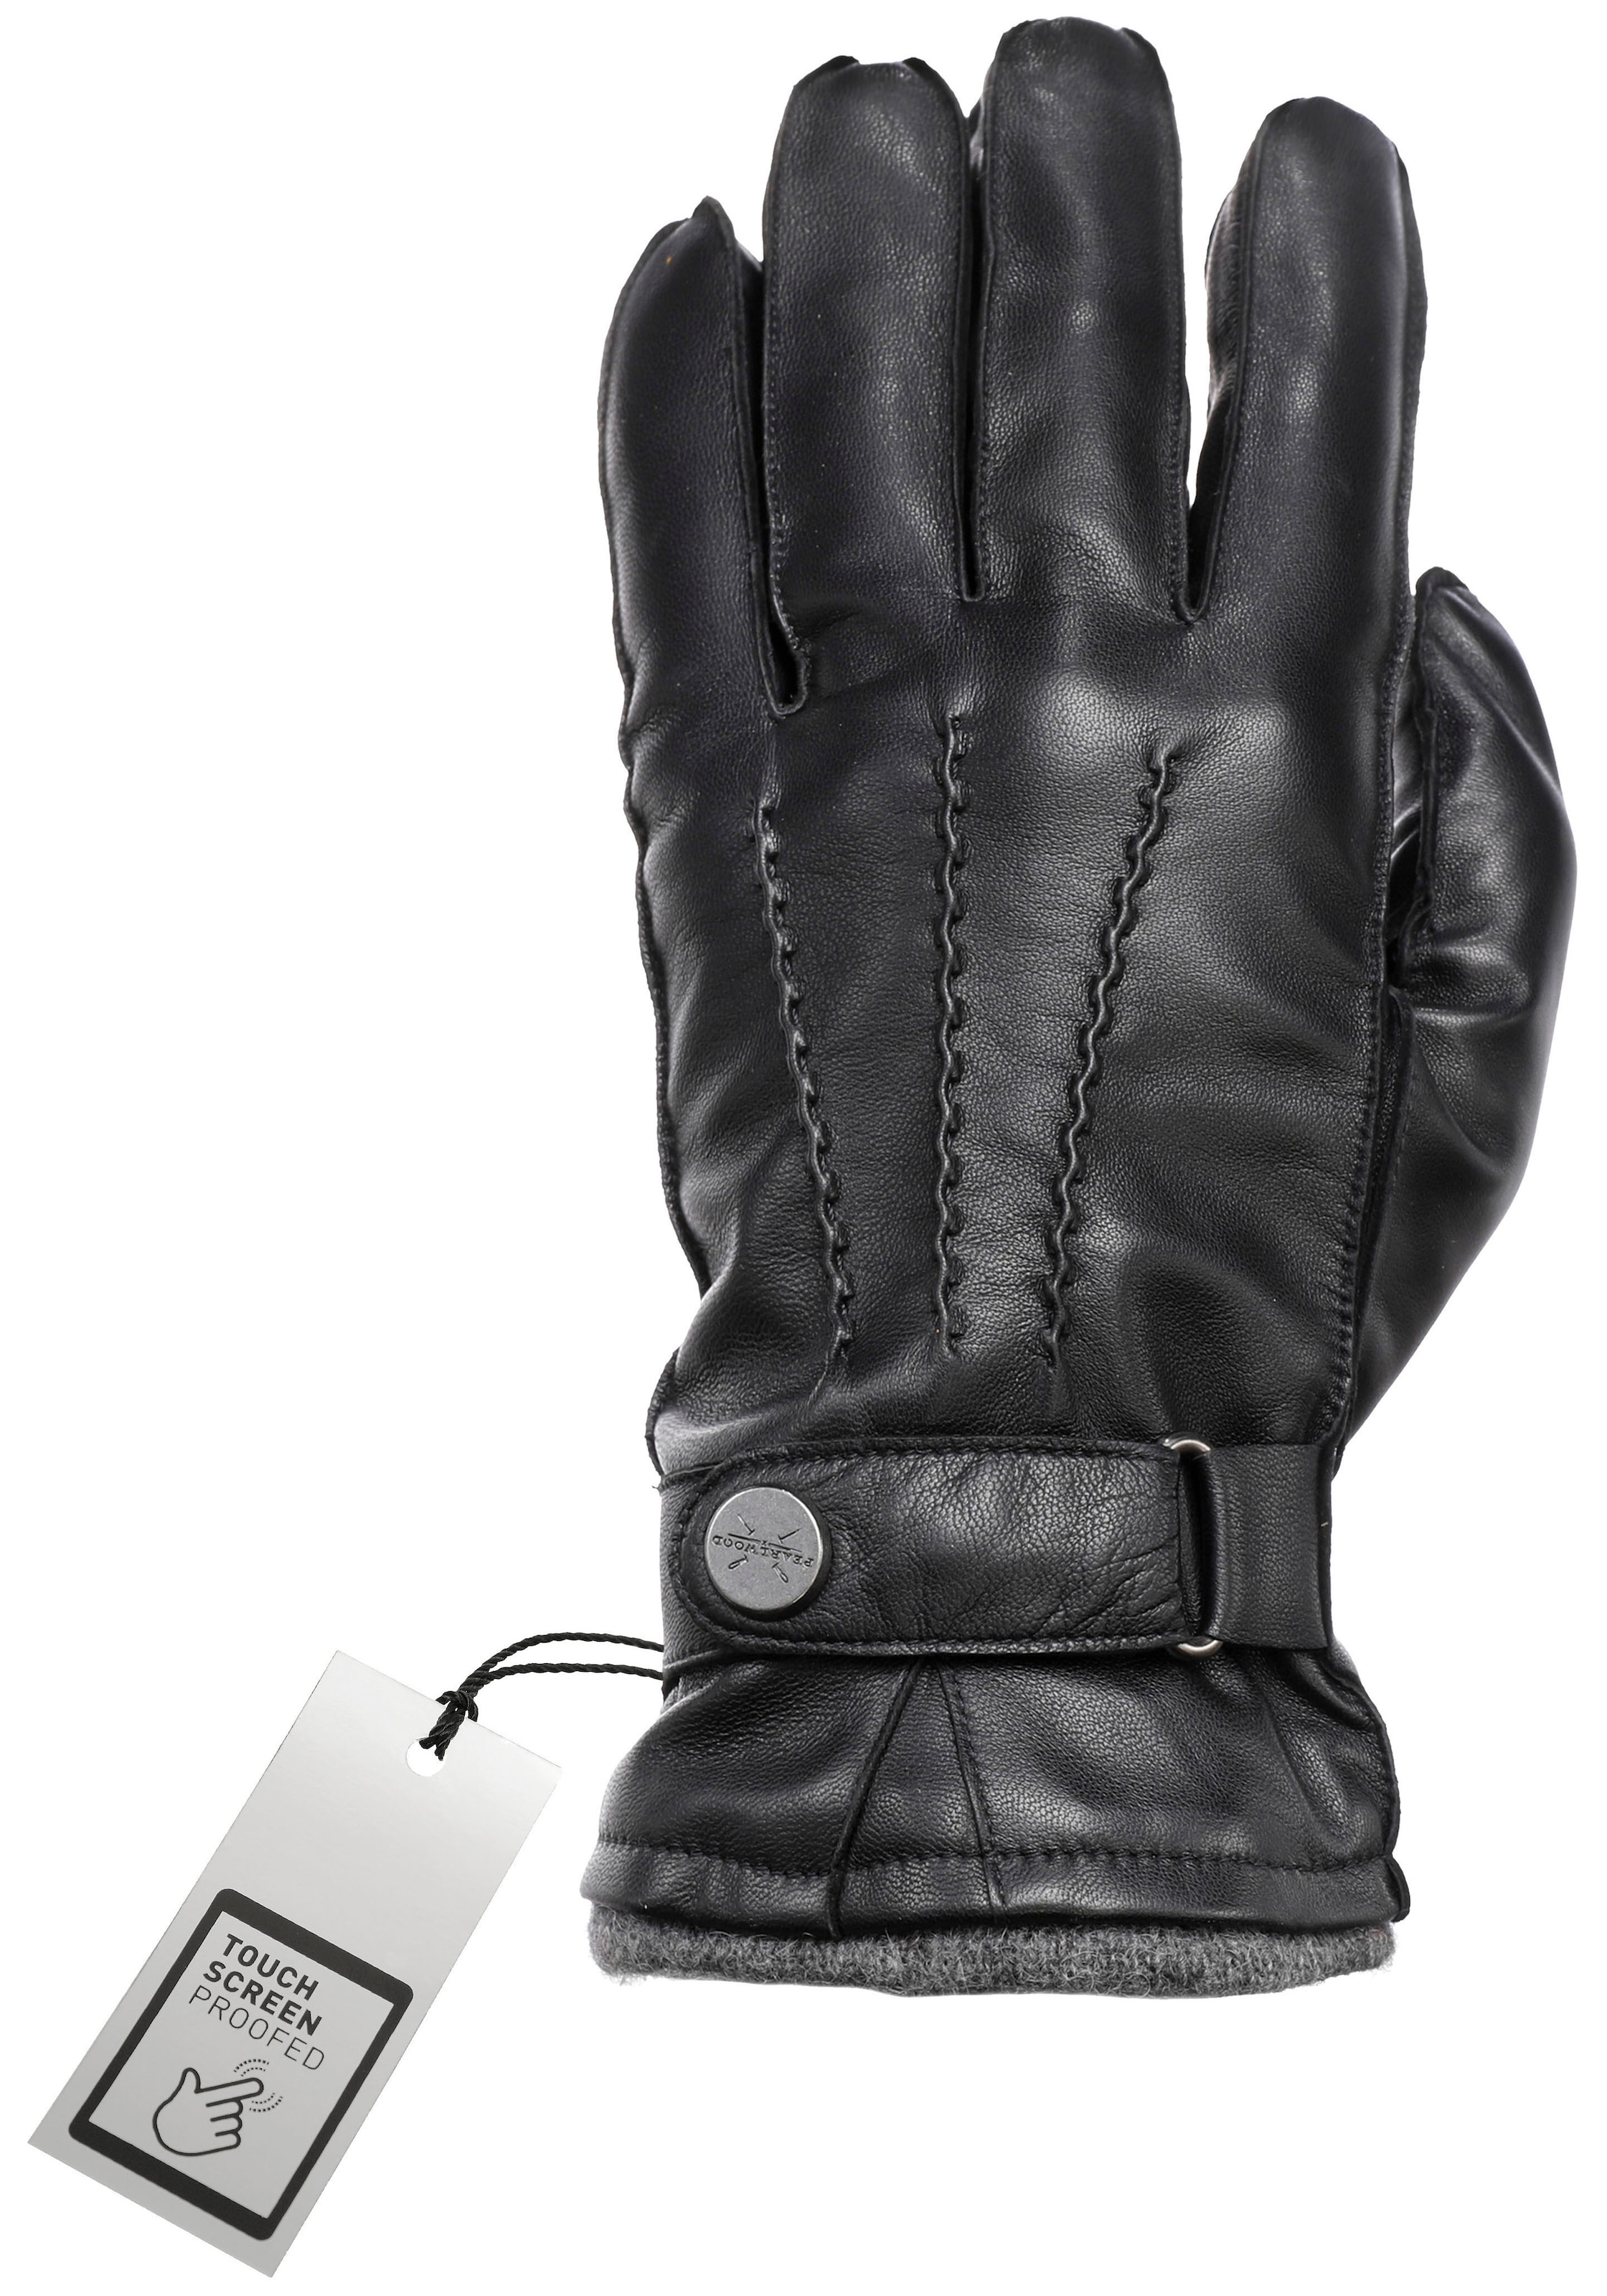 PEARLWOOD Lederhandschuhe - proofed für Finger 10 System BAUR »Mike«, Touchscreen kaufen 